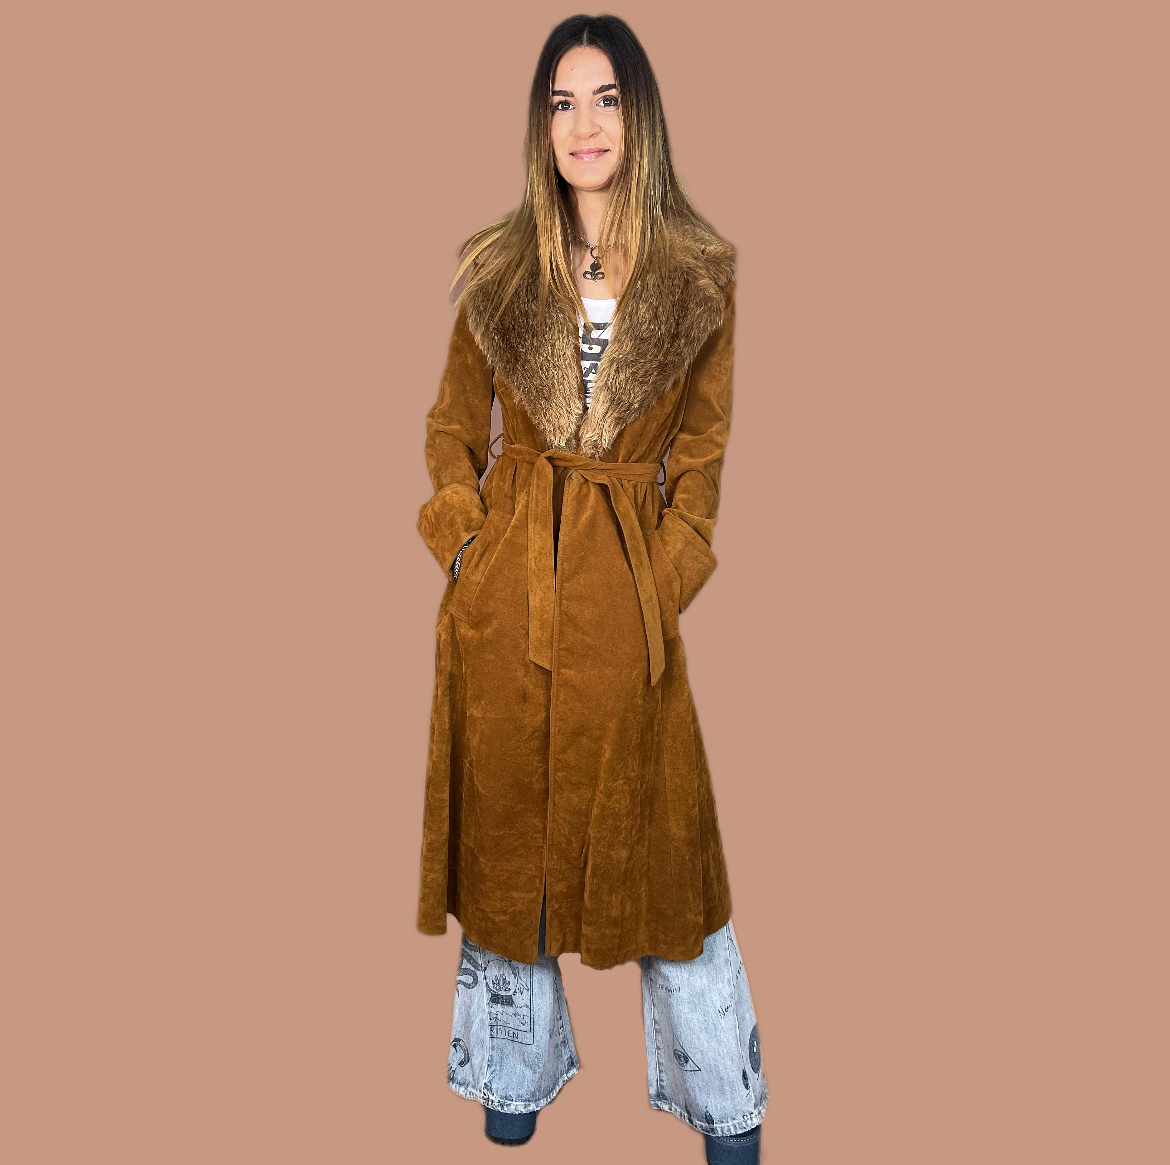 Vintage faux suede/velvety coat